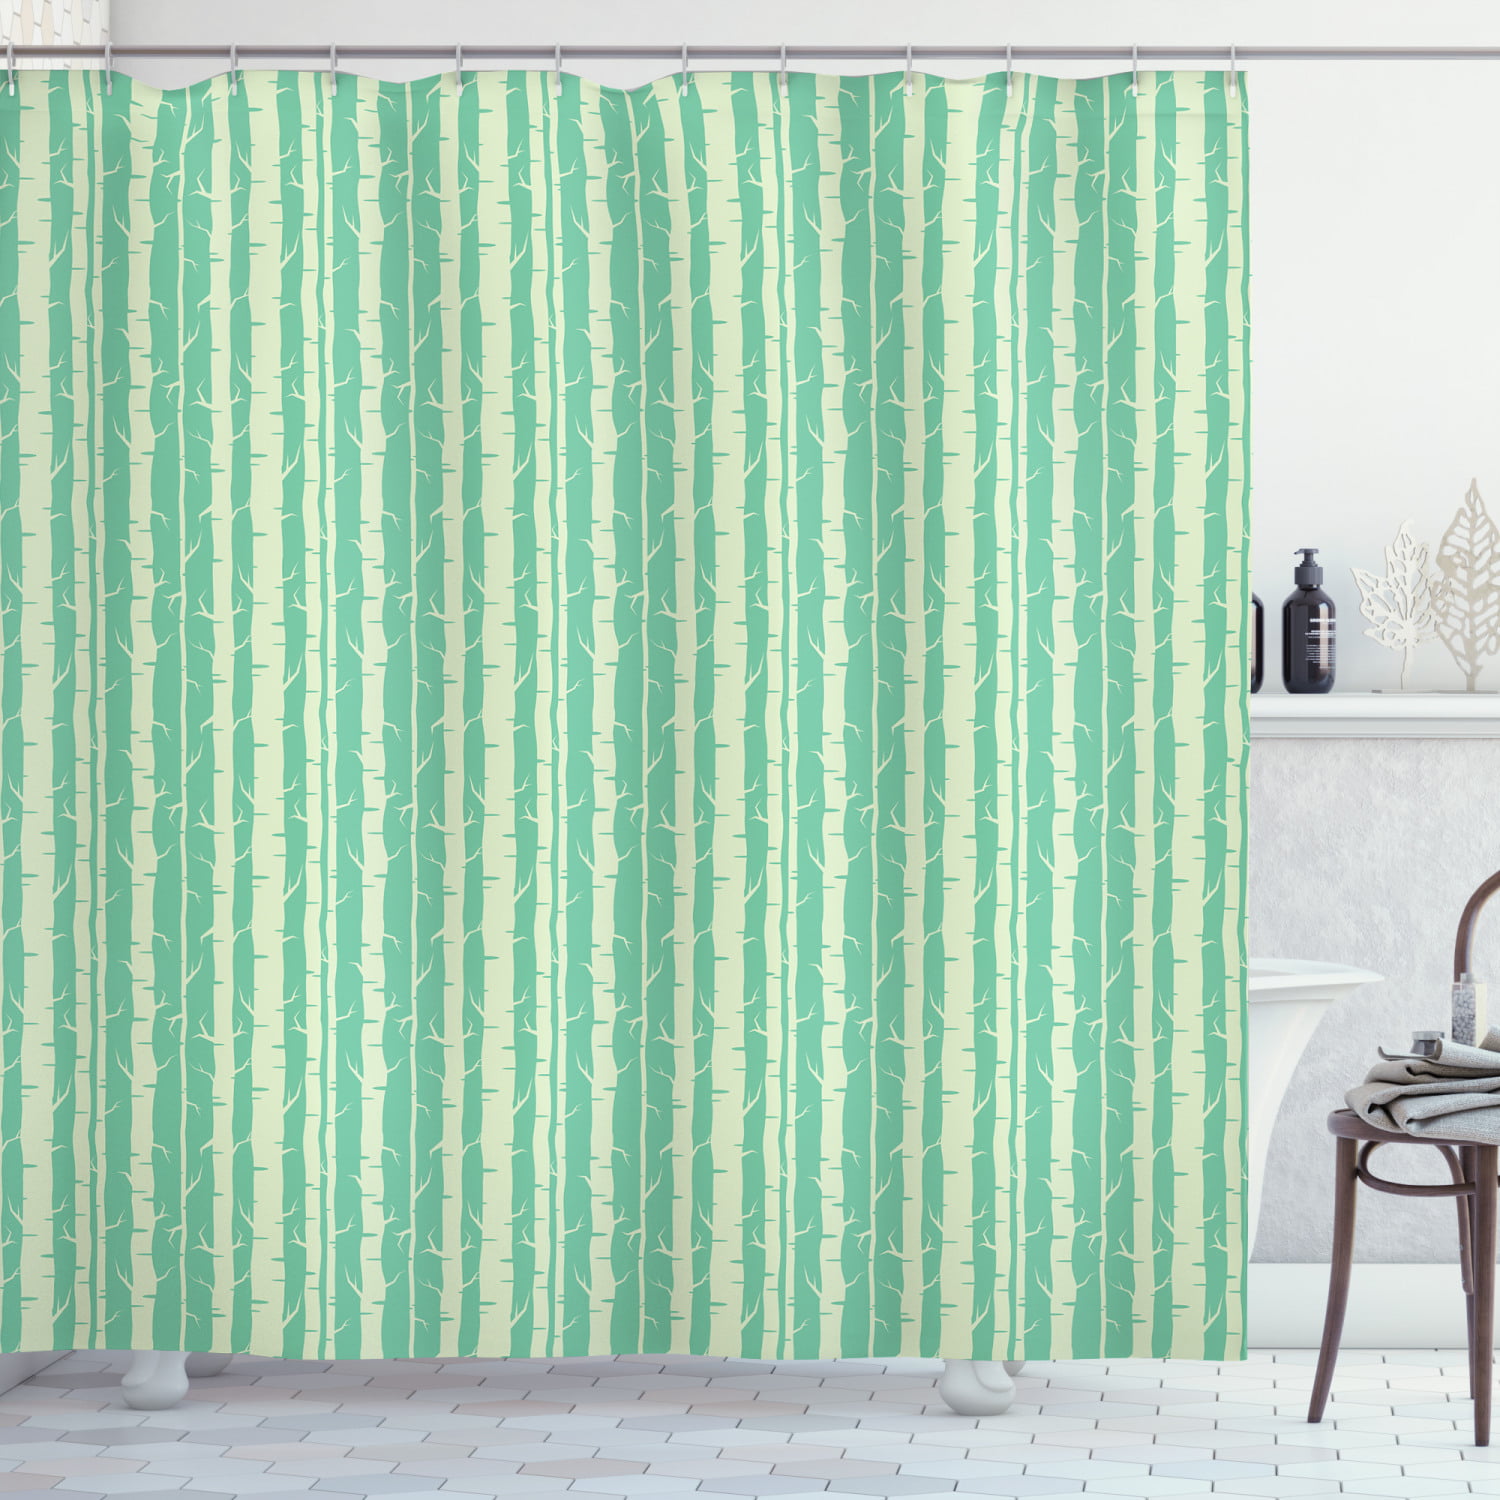 Woods Pattern Shower Curtain Fabric Decor Set with Hooks 4 Sizes 